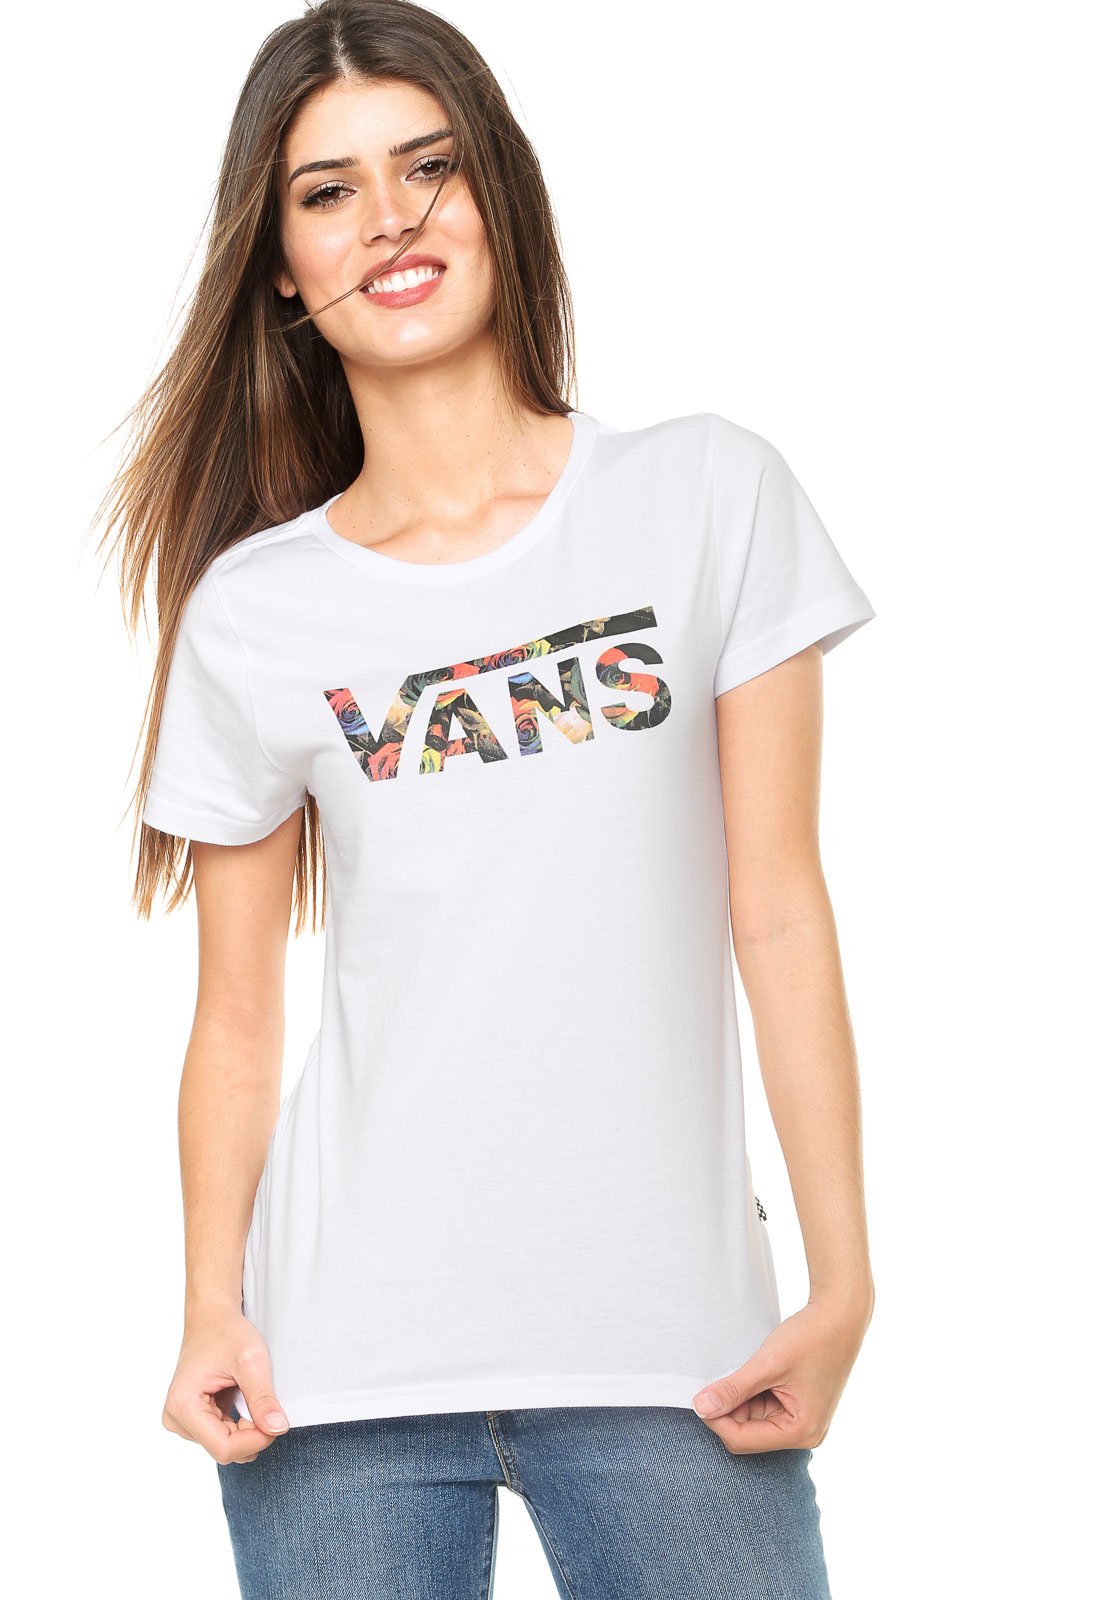 Vans Camisetas Femininas Factory Sale, 52% OFF | www.emanagreen.com